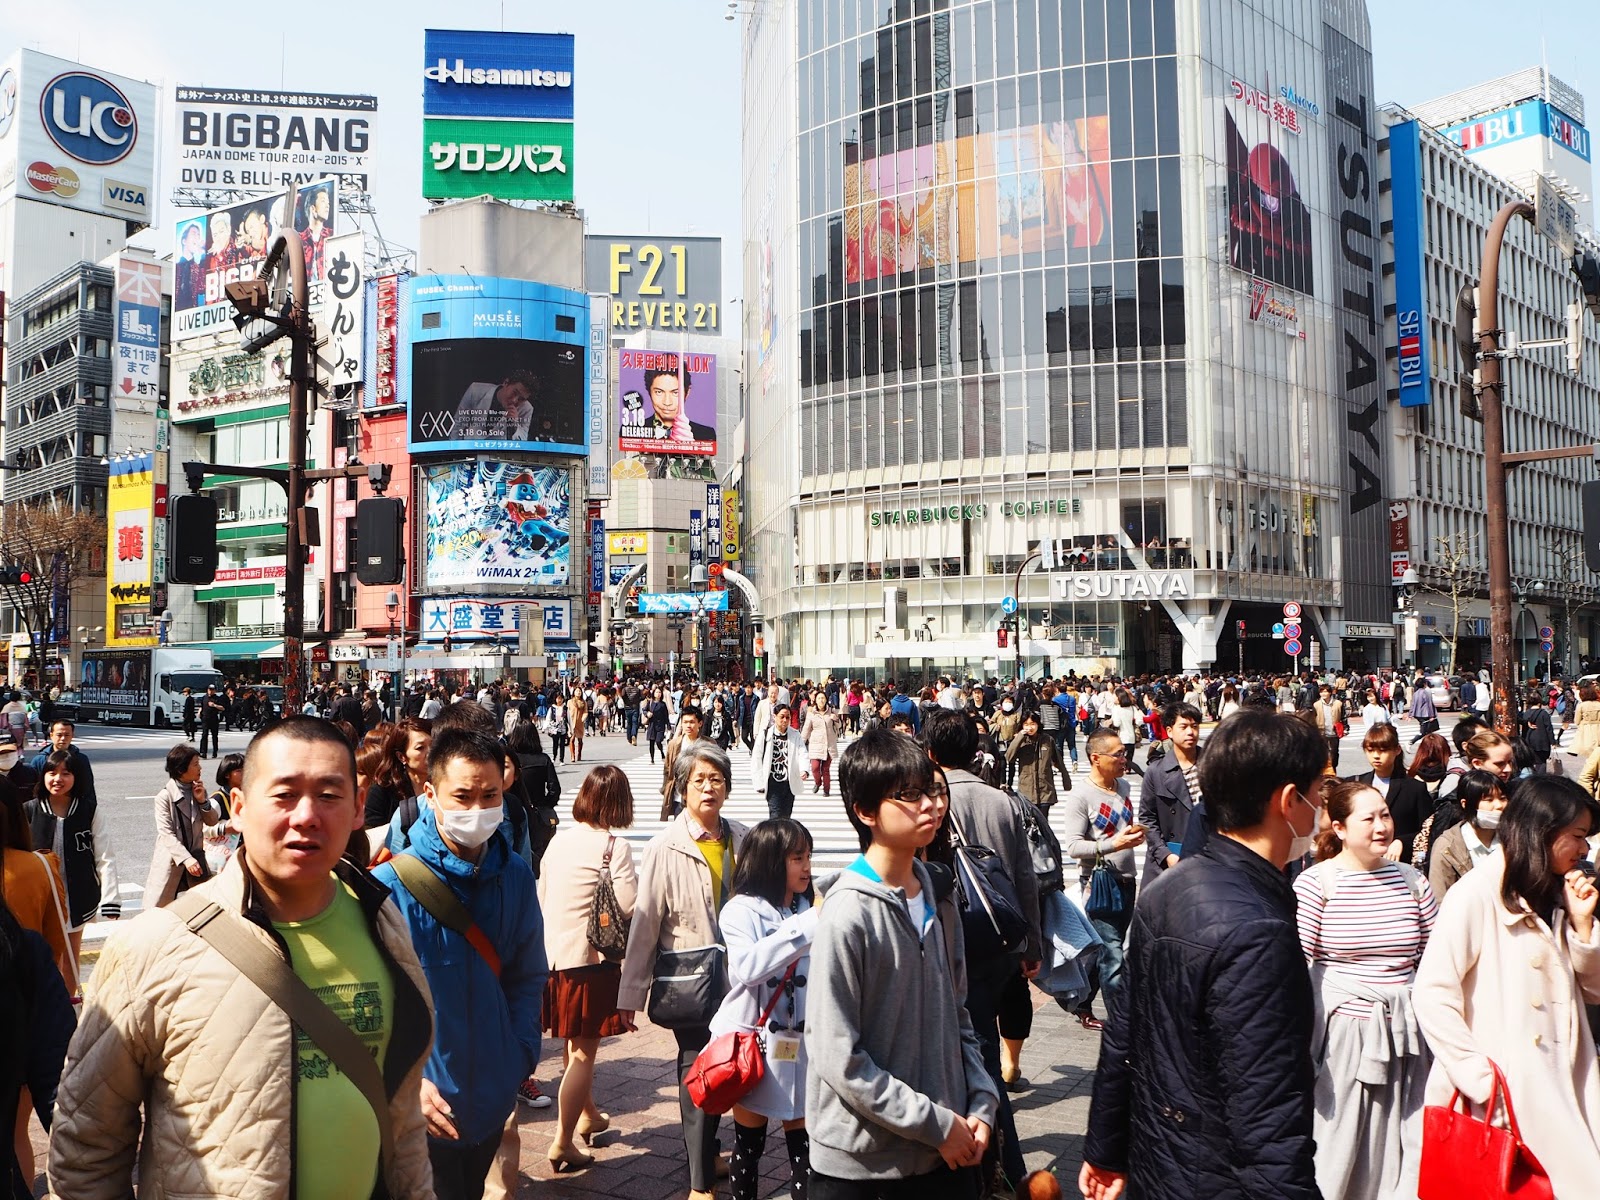 Walk Across the Busiest Crossing in the World - Shibuya